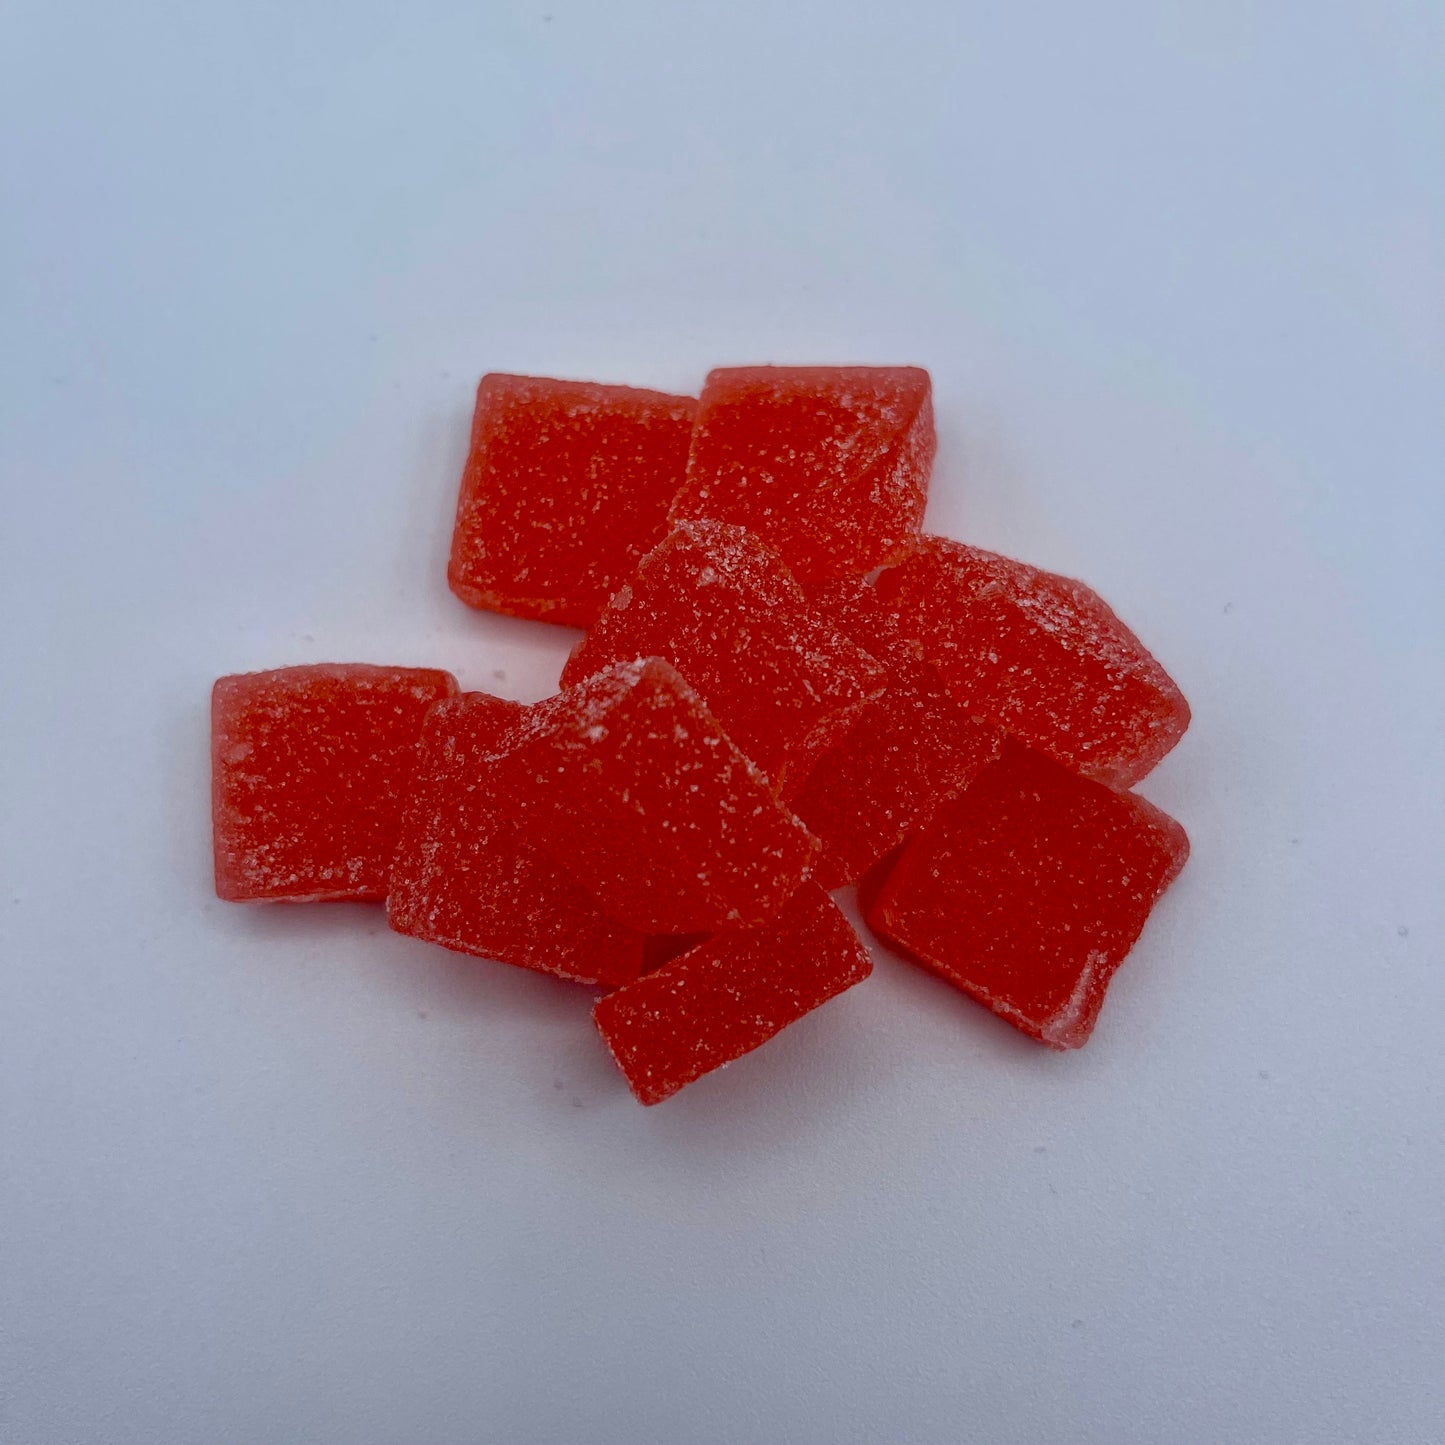 THC + CBD 100mg - Gummies 10 Pack of Edibles - Cherry Pineapple